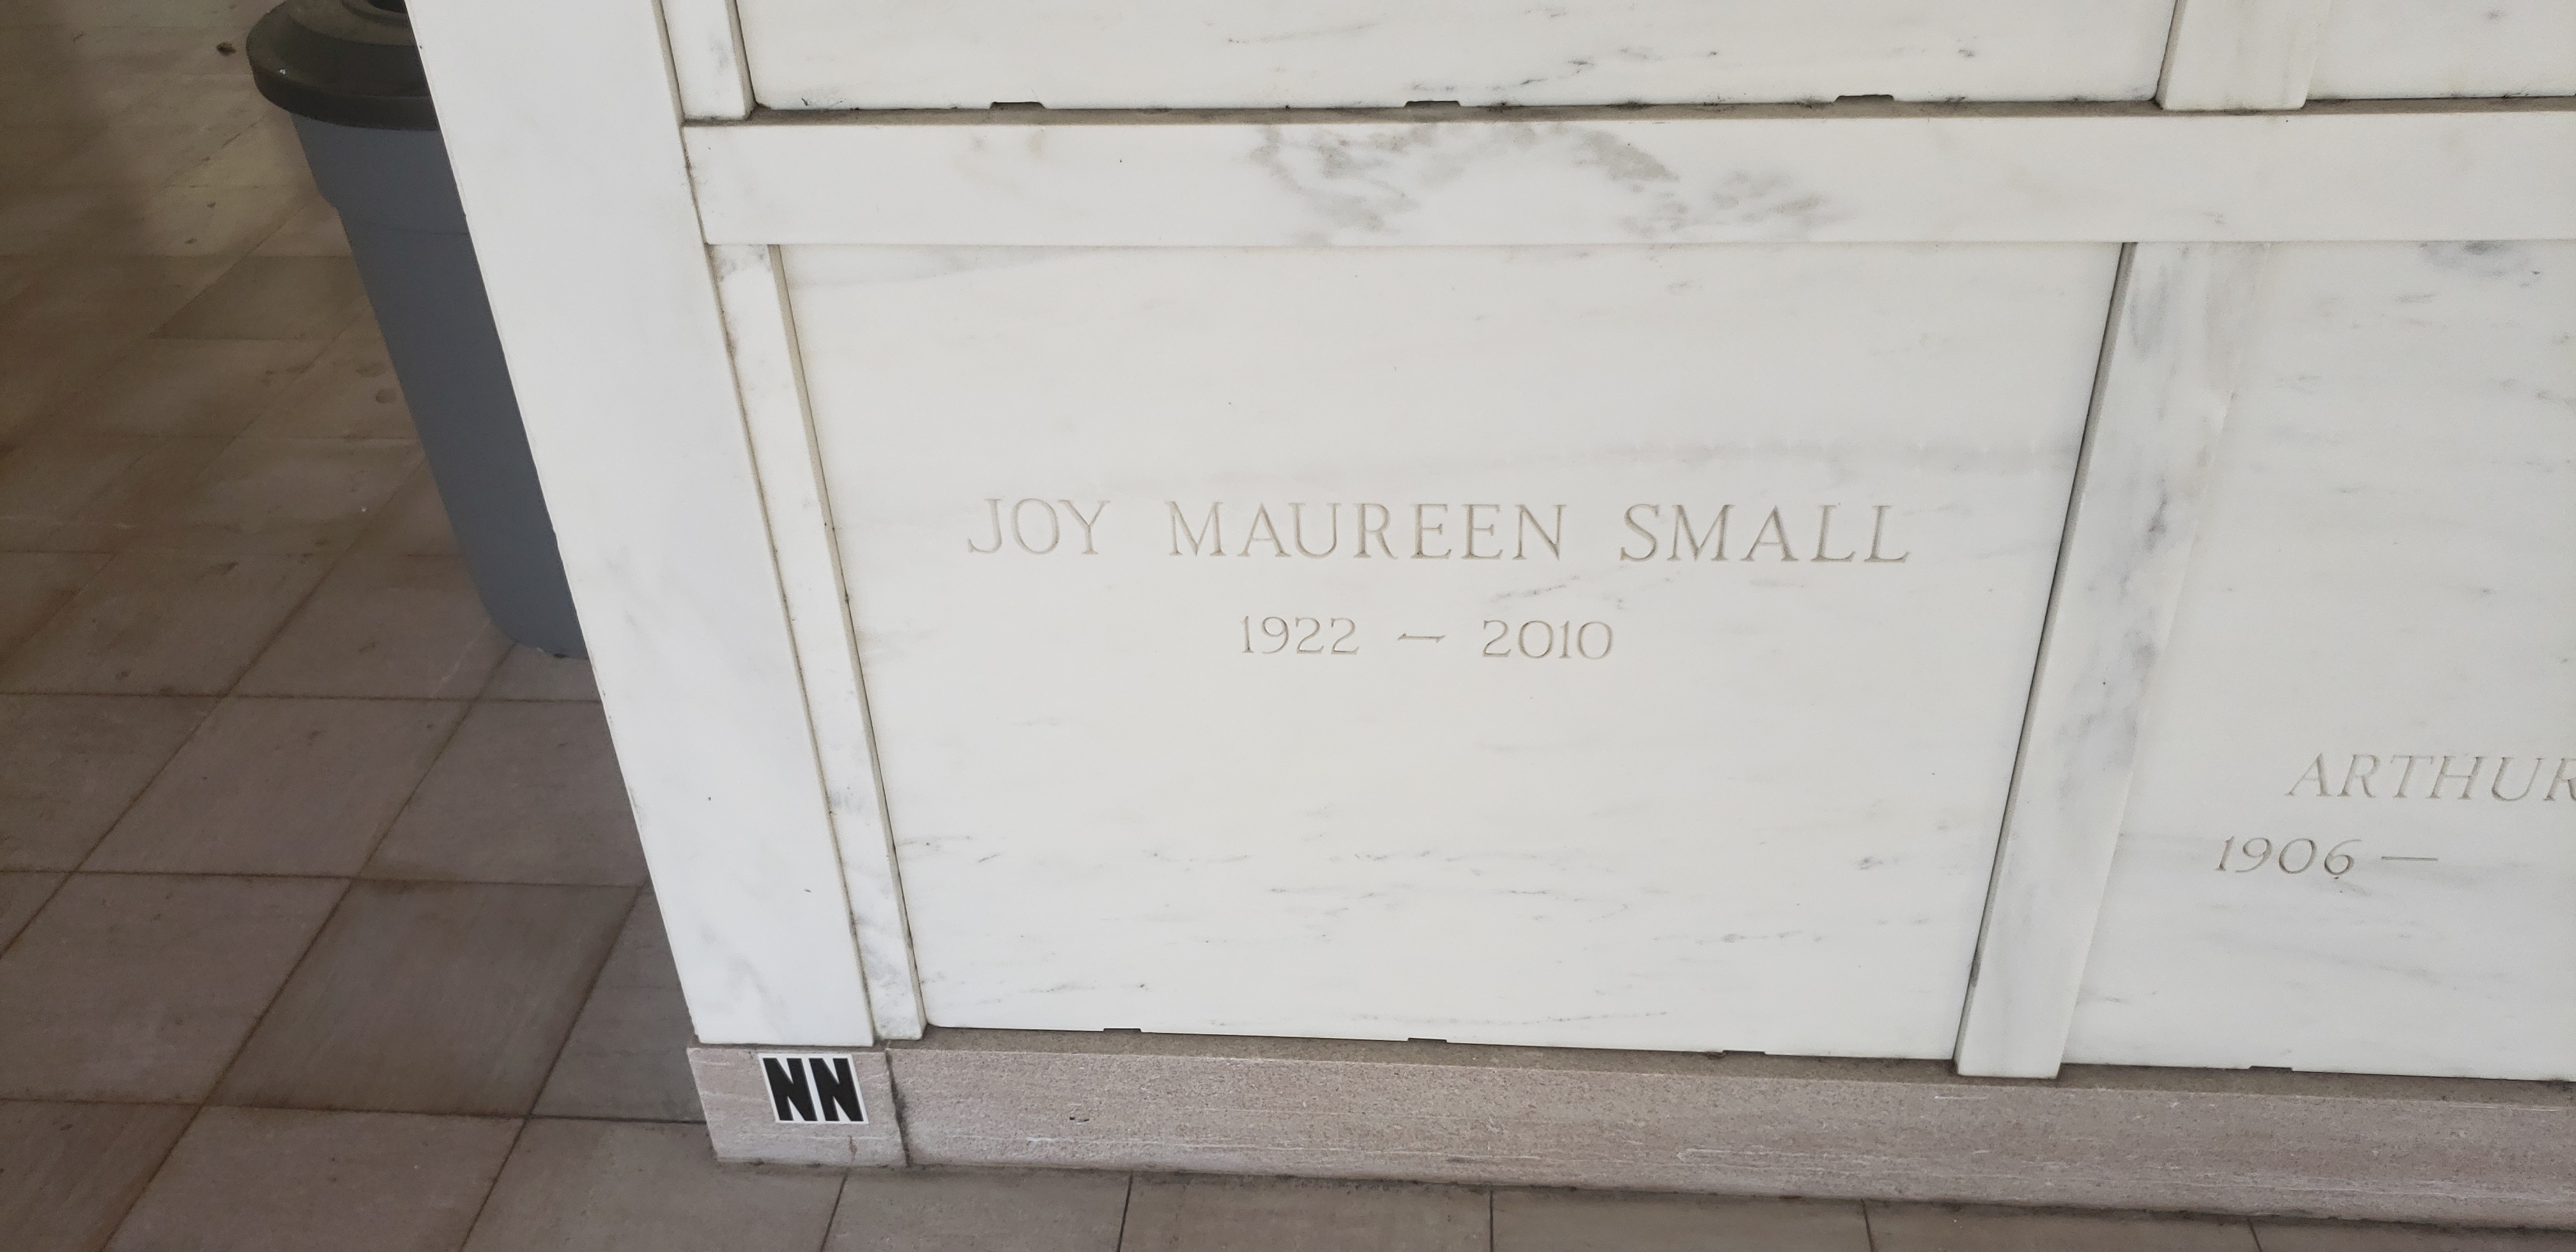 Joy Maureen Small